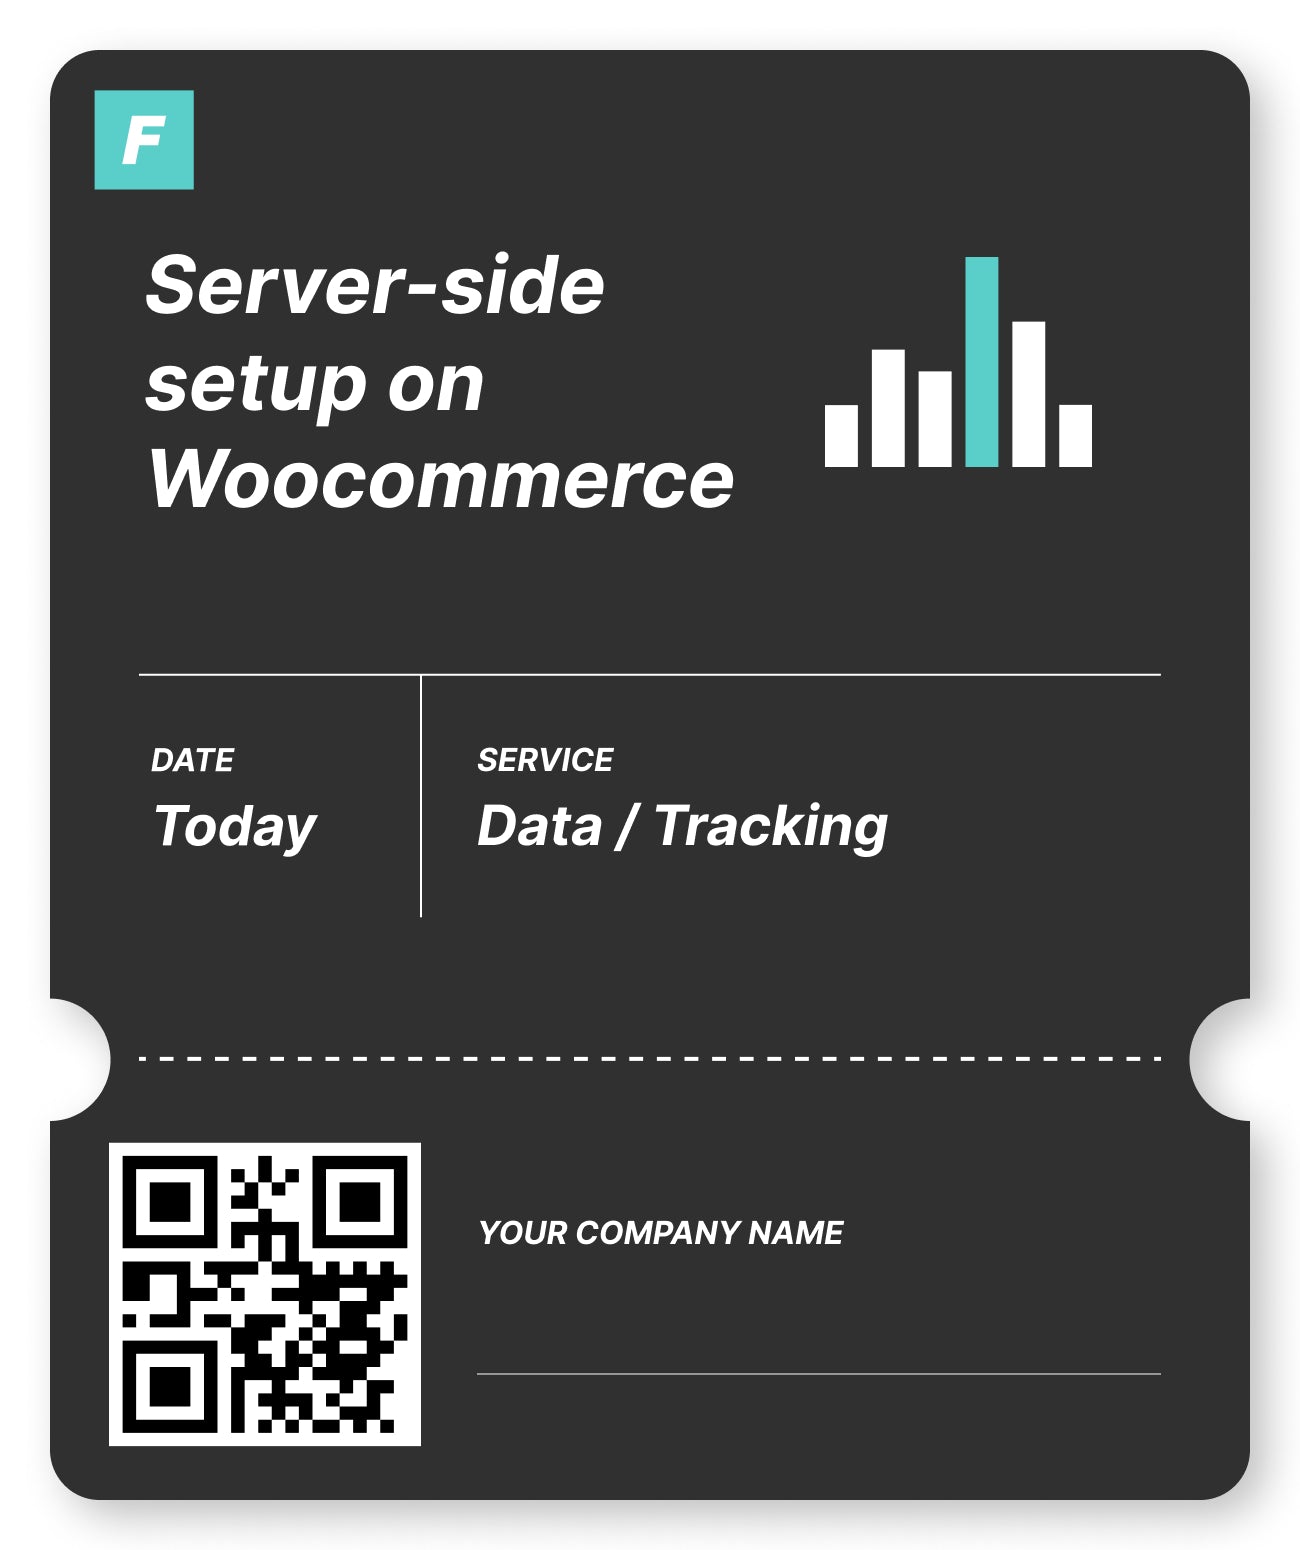 Server-side setup on Woocommerce